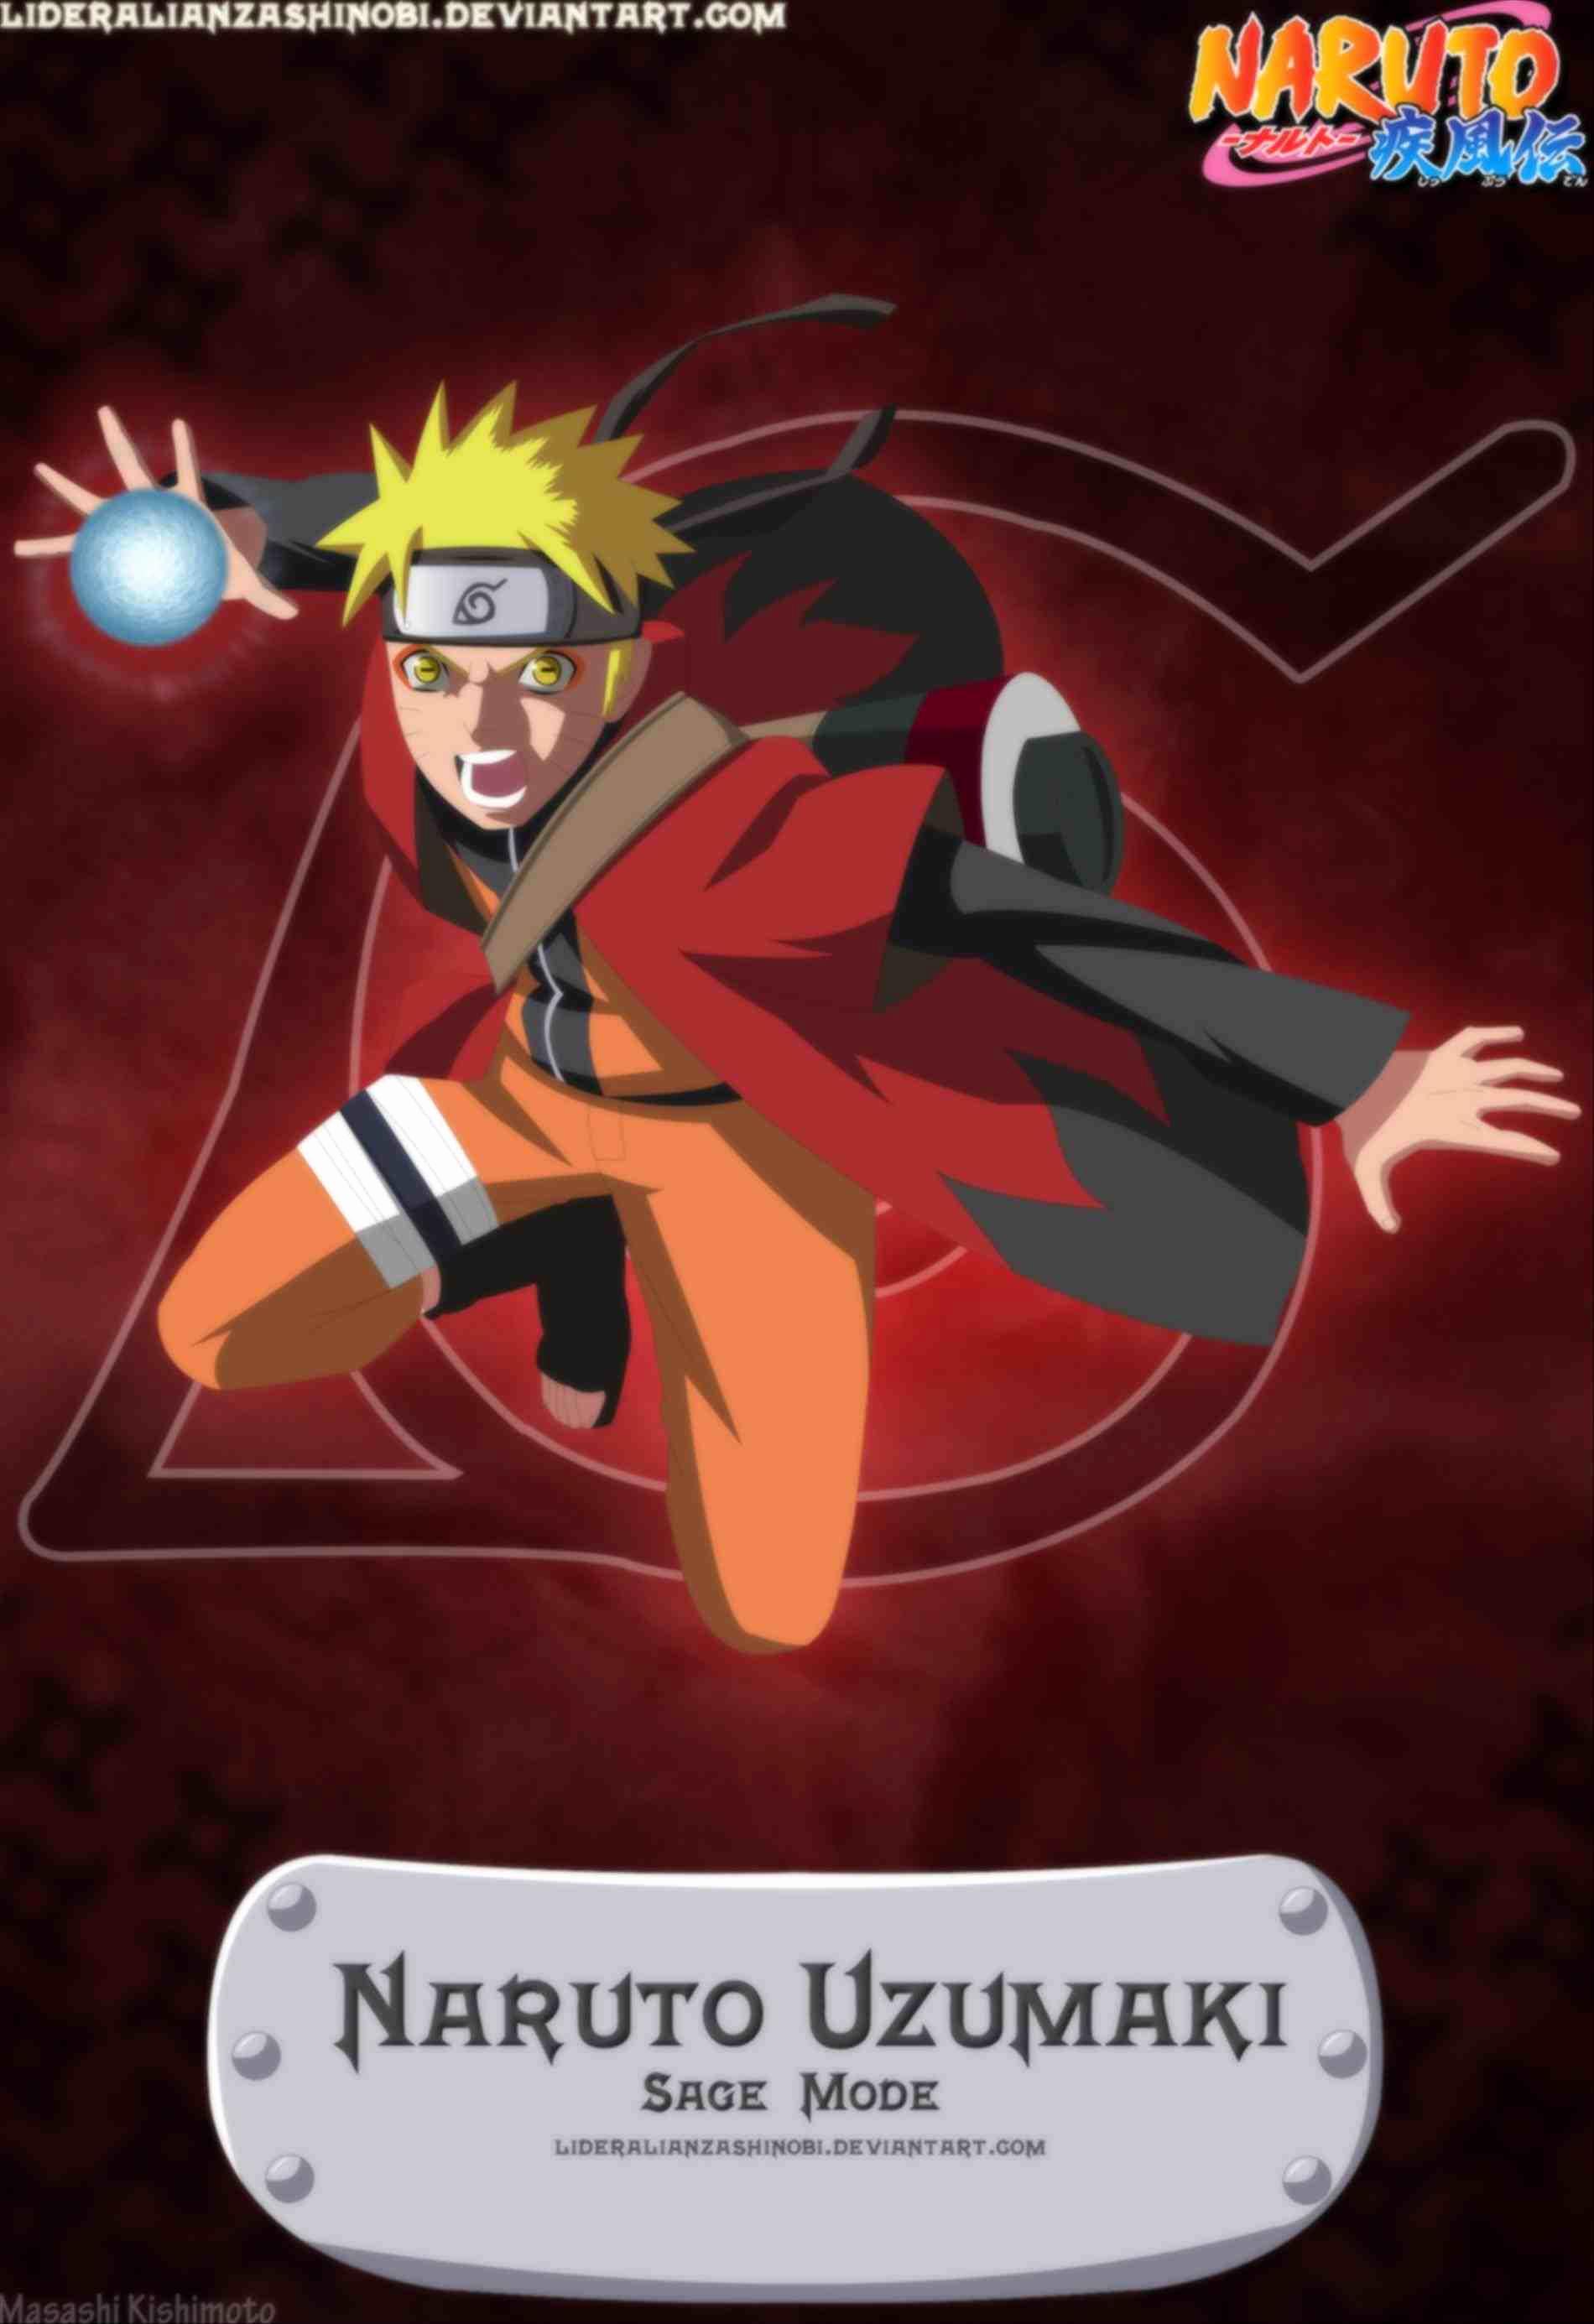 Naruto Uzumaki Sage Mode Picture As Wallpaper HD